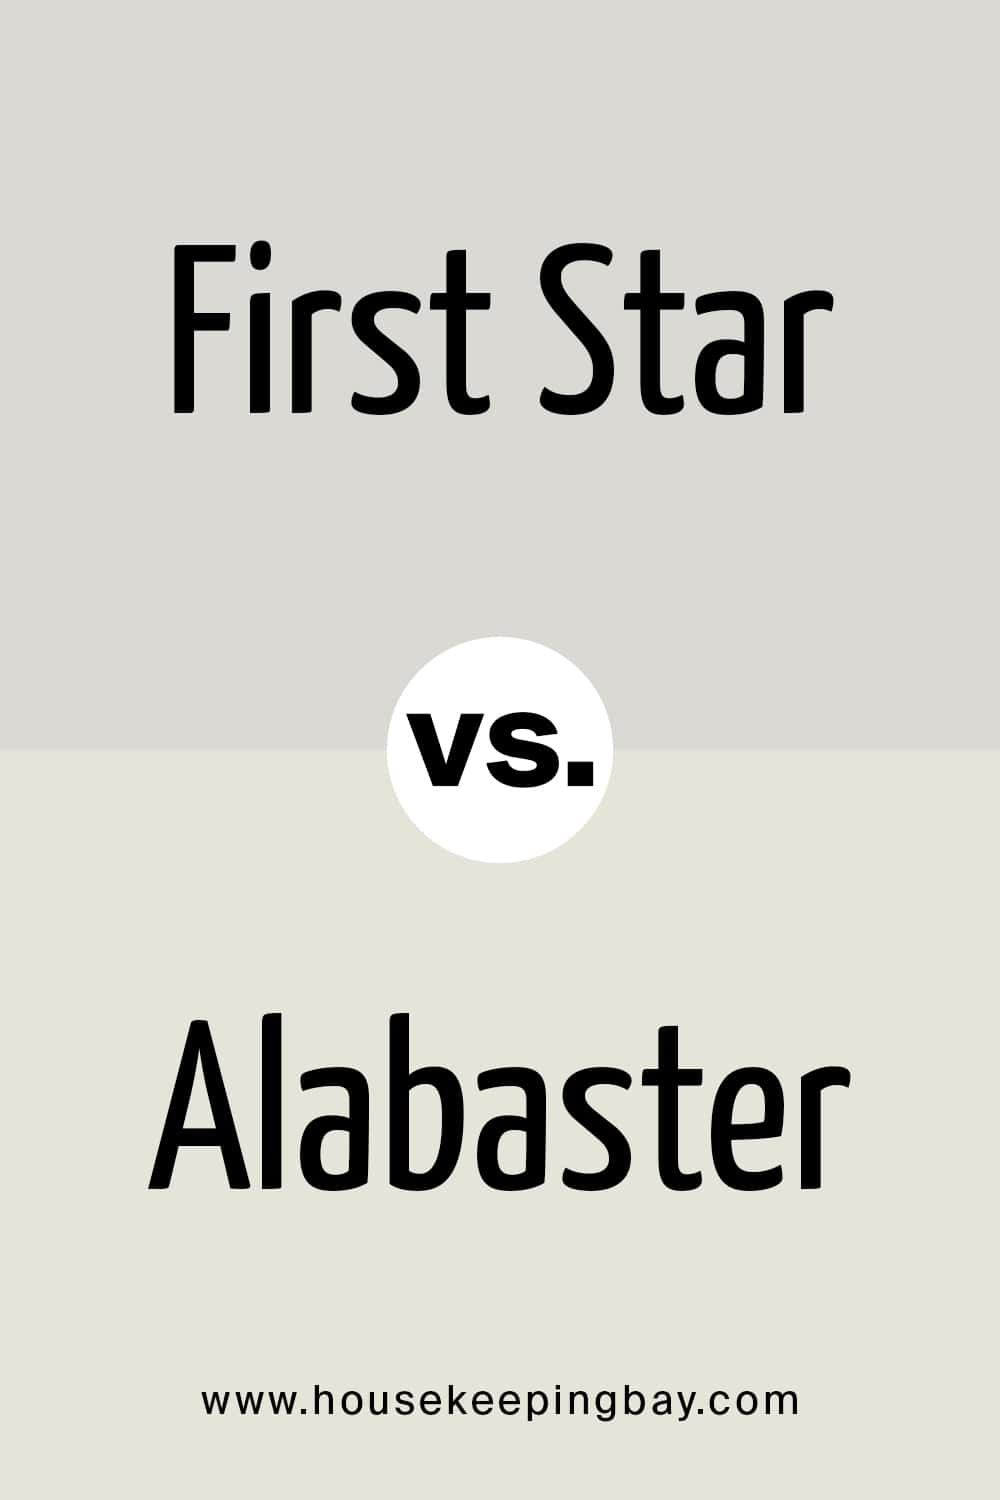 First Star VS Alabaster